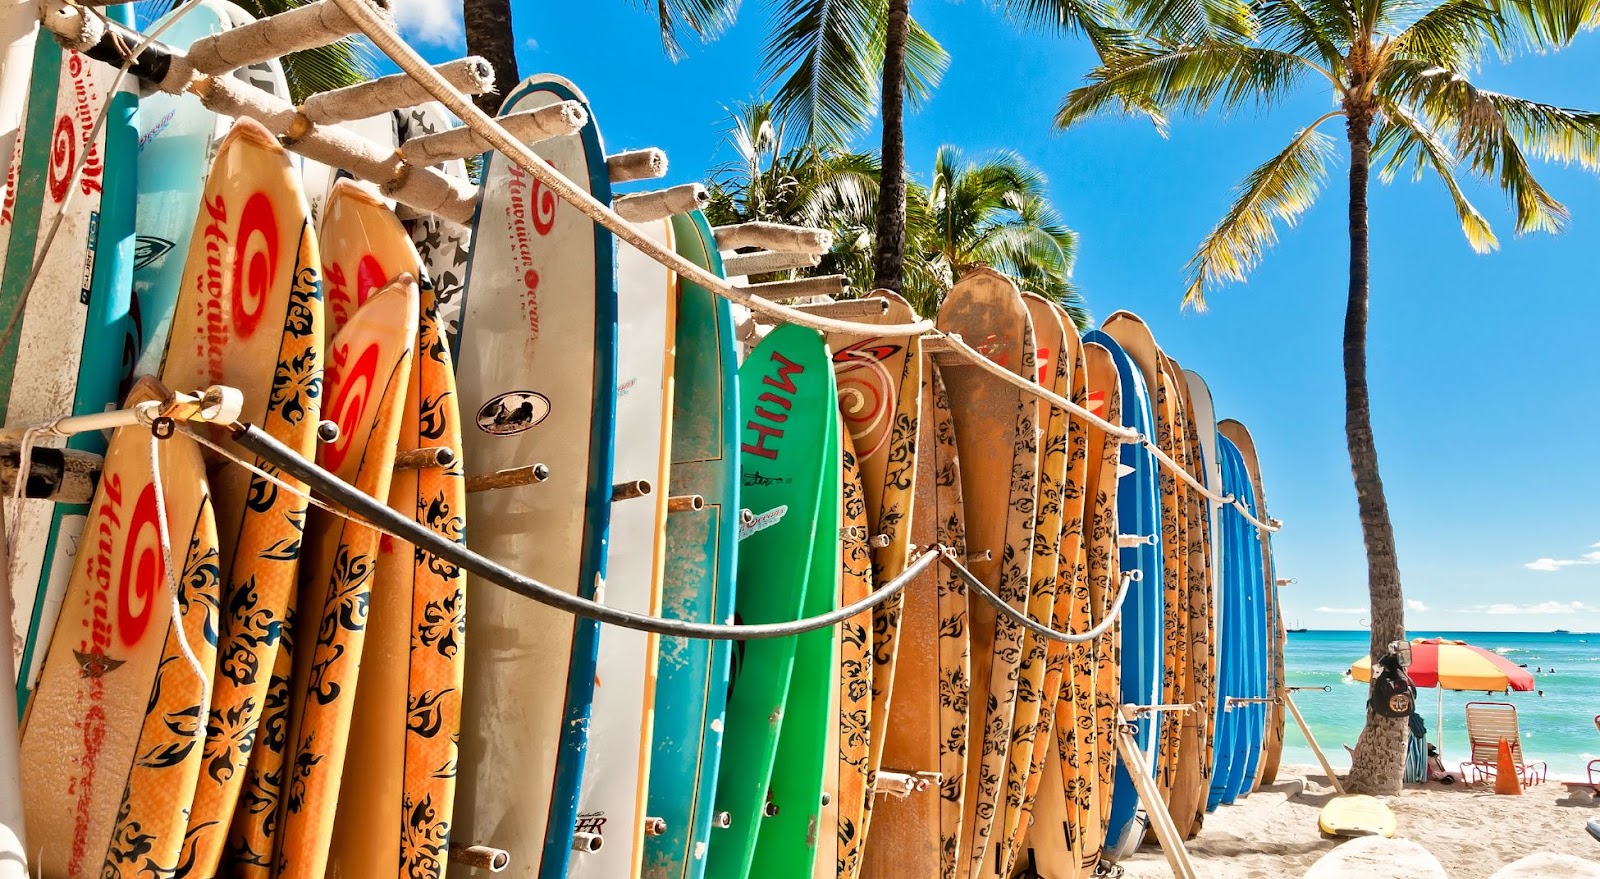 Surfing in Hawaii